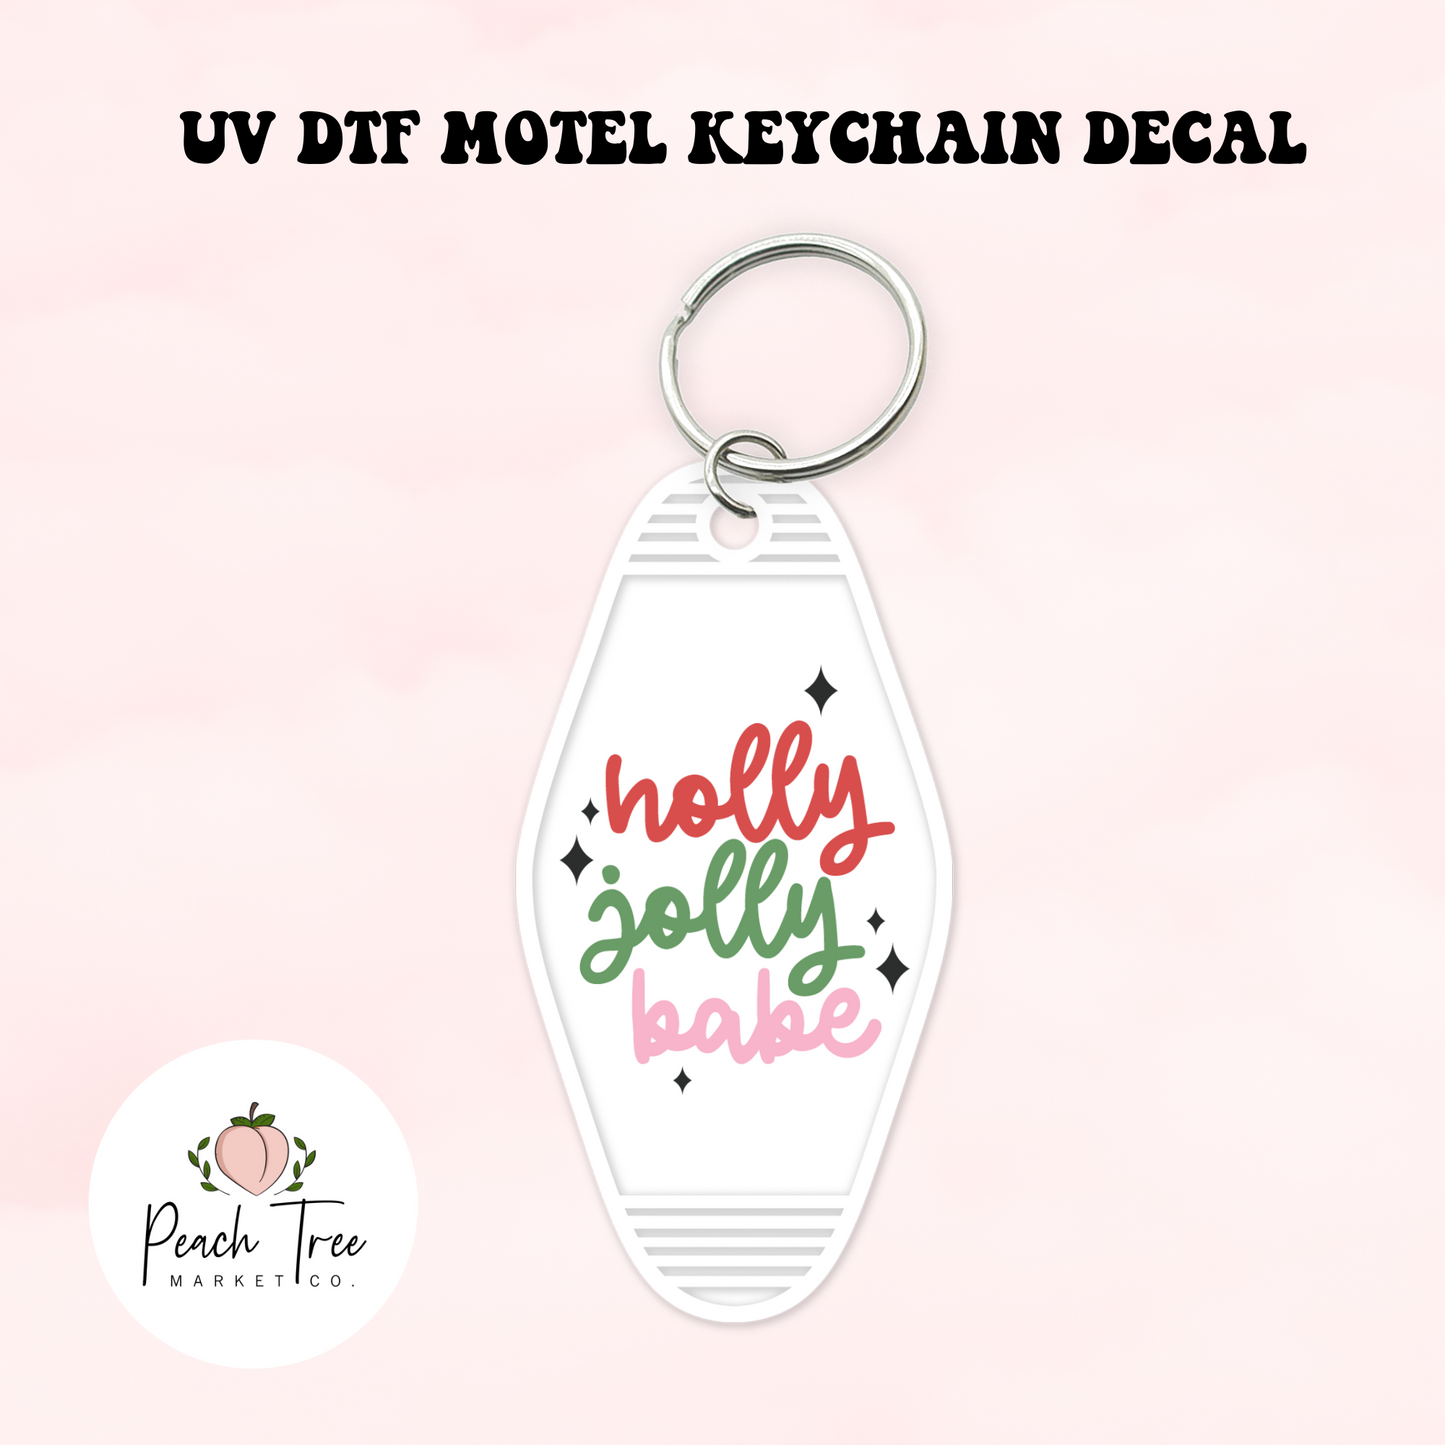 Holly Jolly Babe UV DTF Motel Keychain Decal